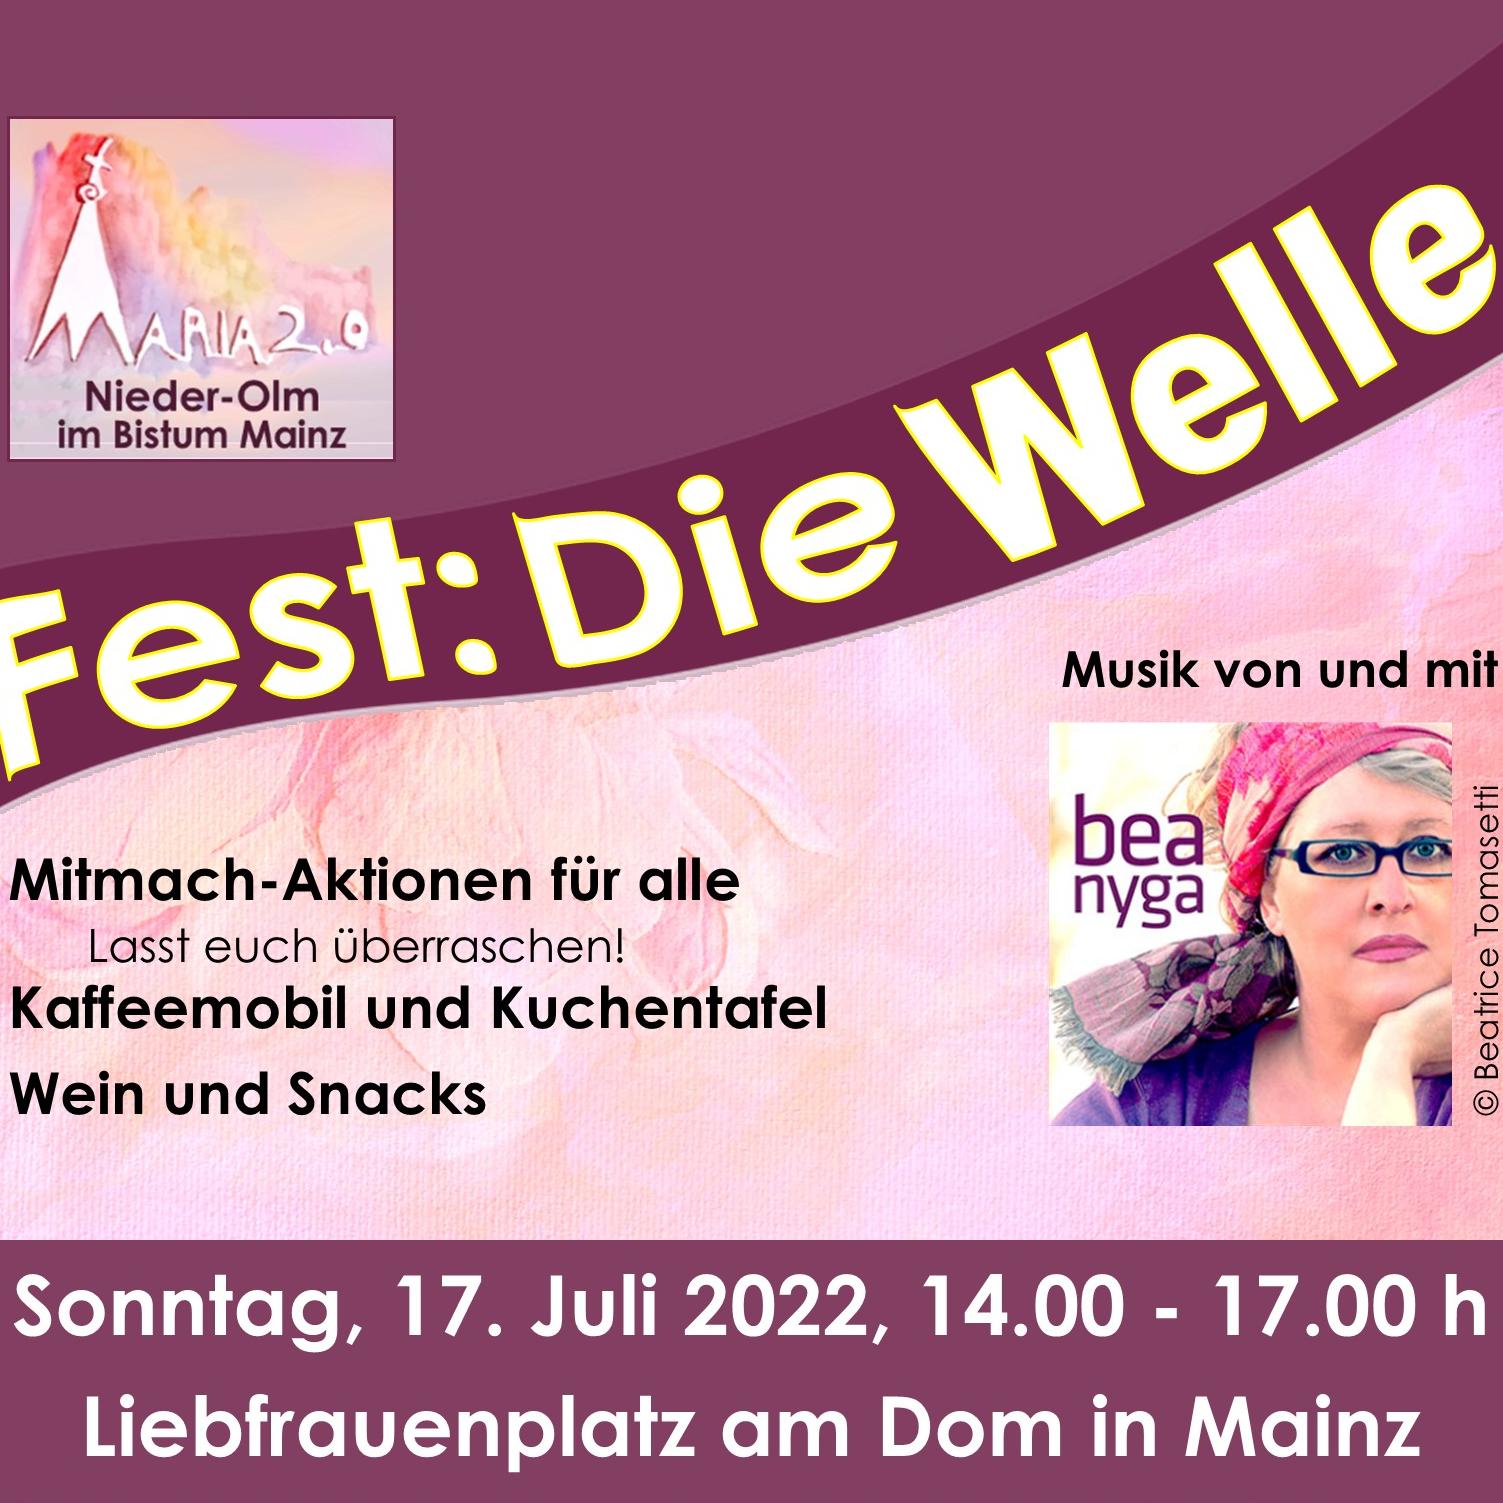 Fest_die Welle Maria 2.0 (c) Andrea Keber